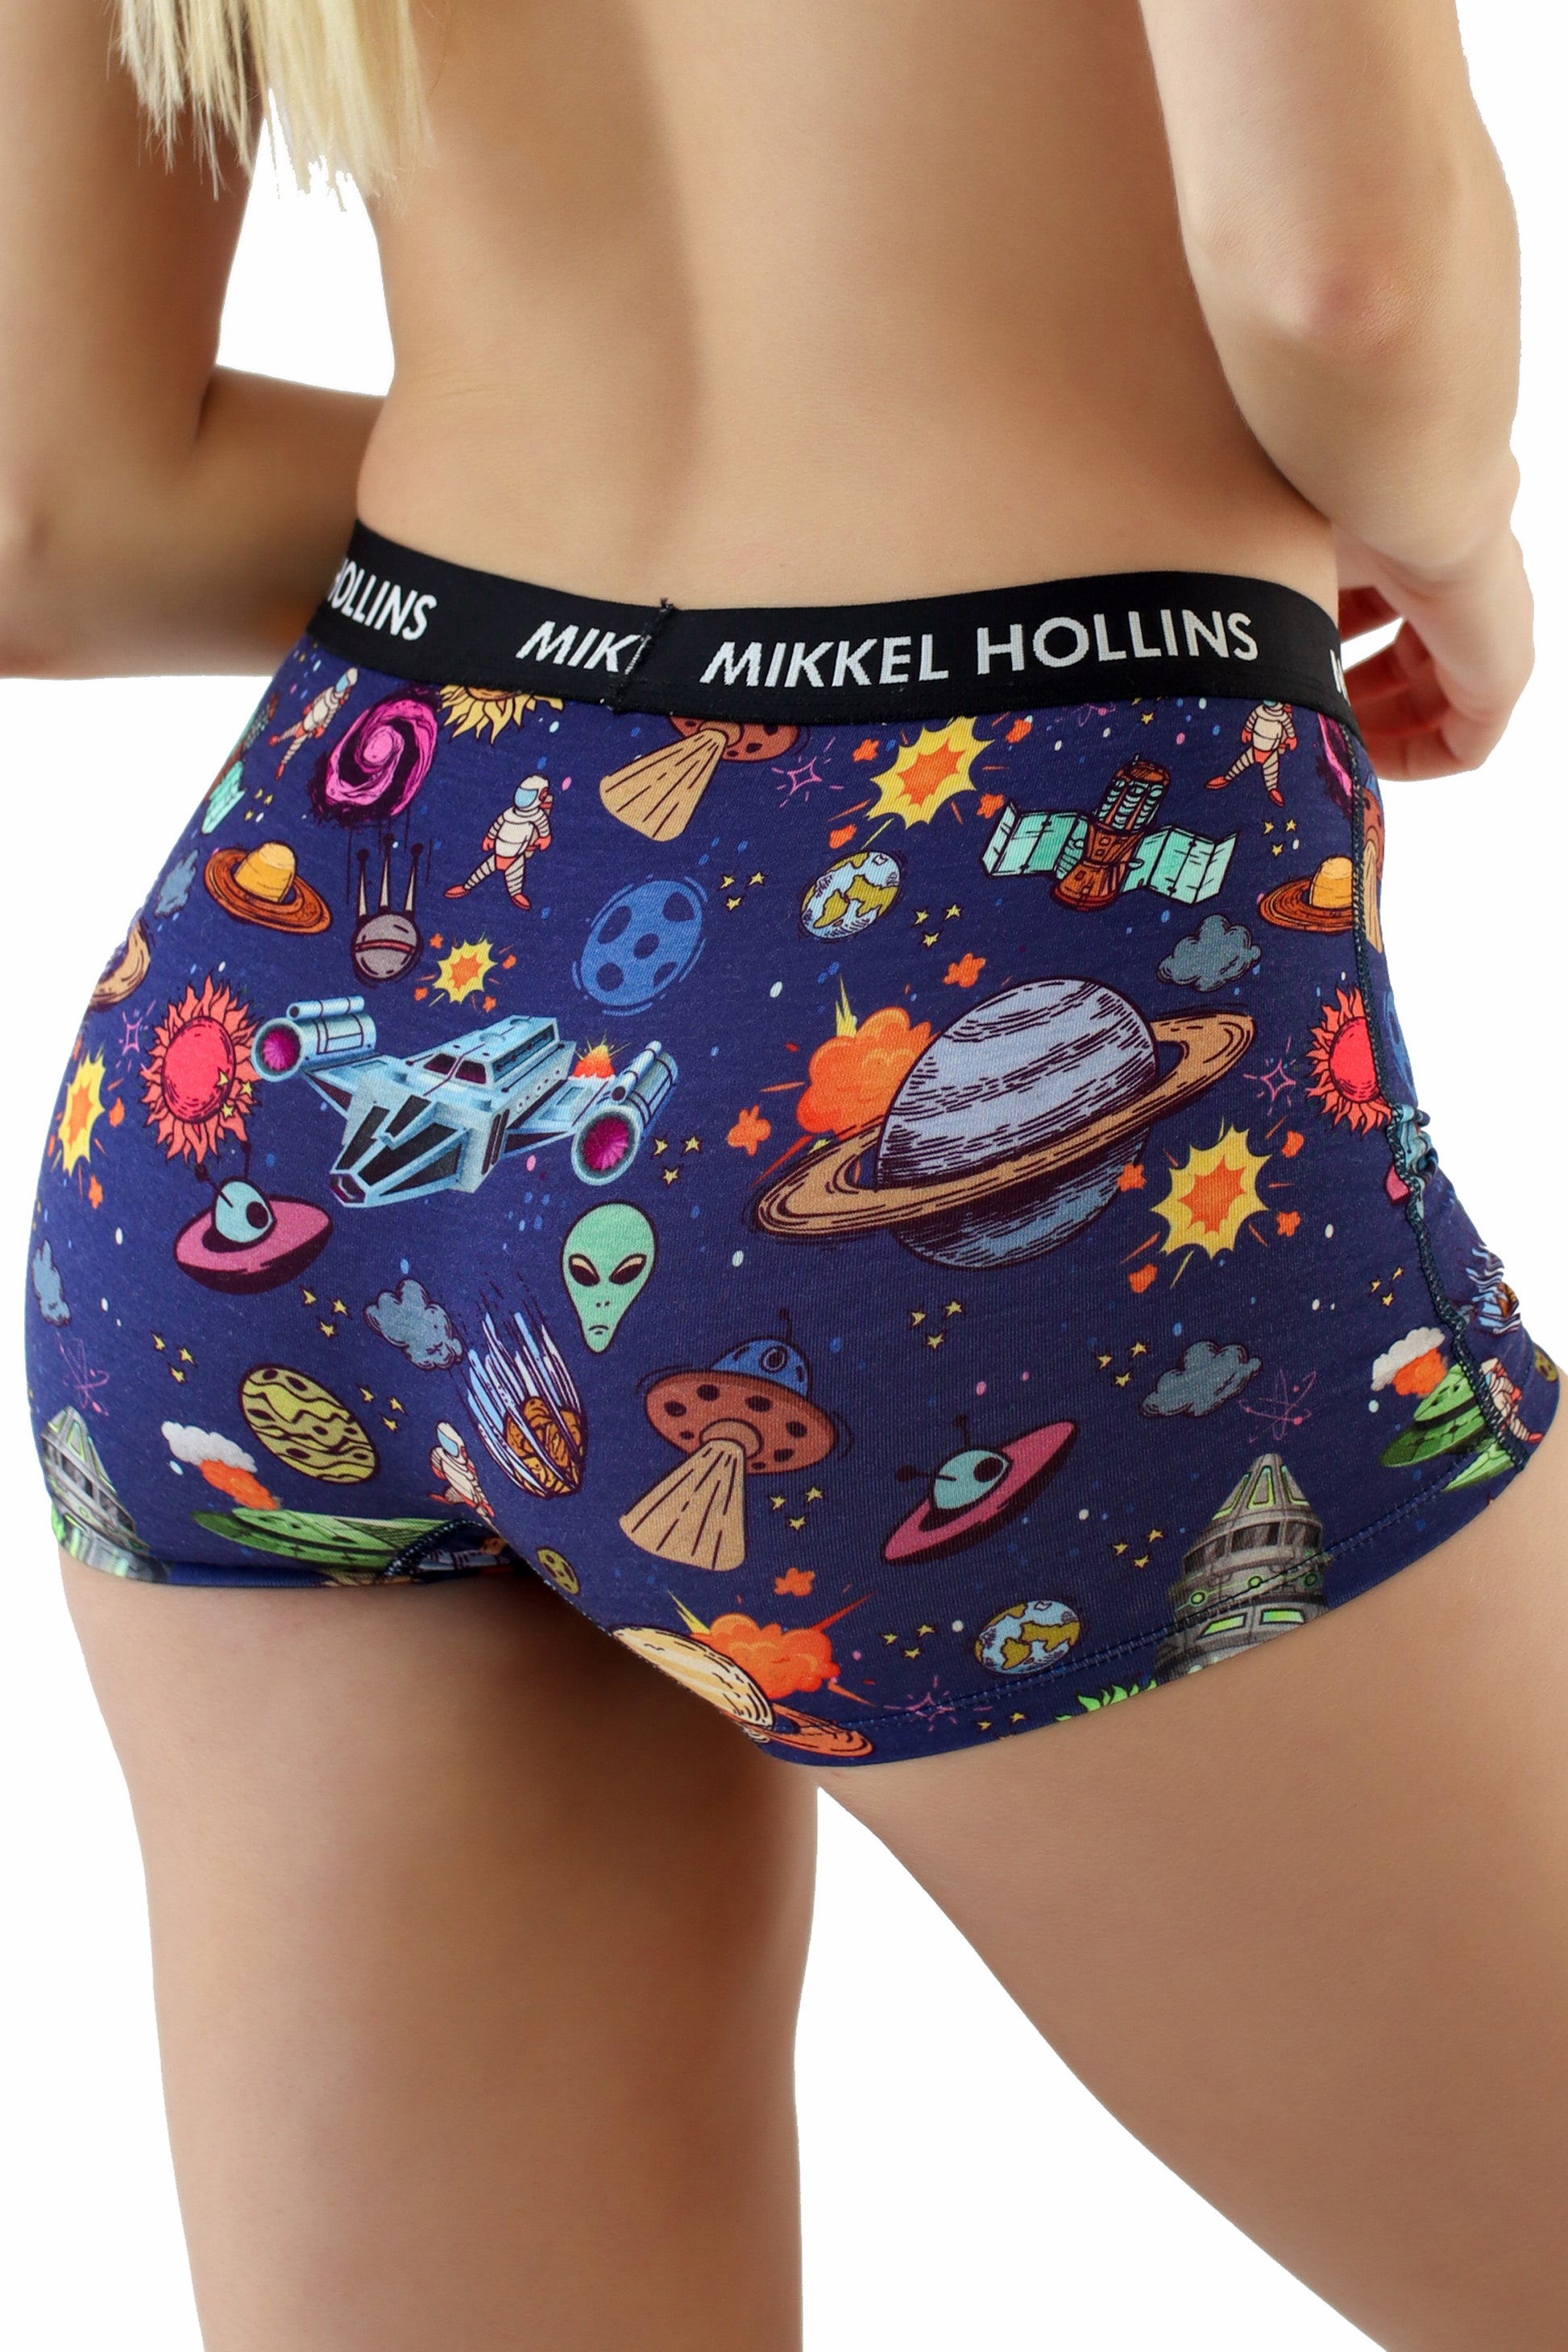 Space Wars - Boy Shorts Underwear For Women